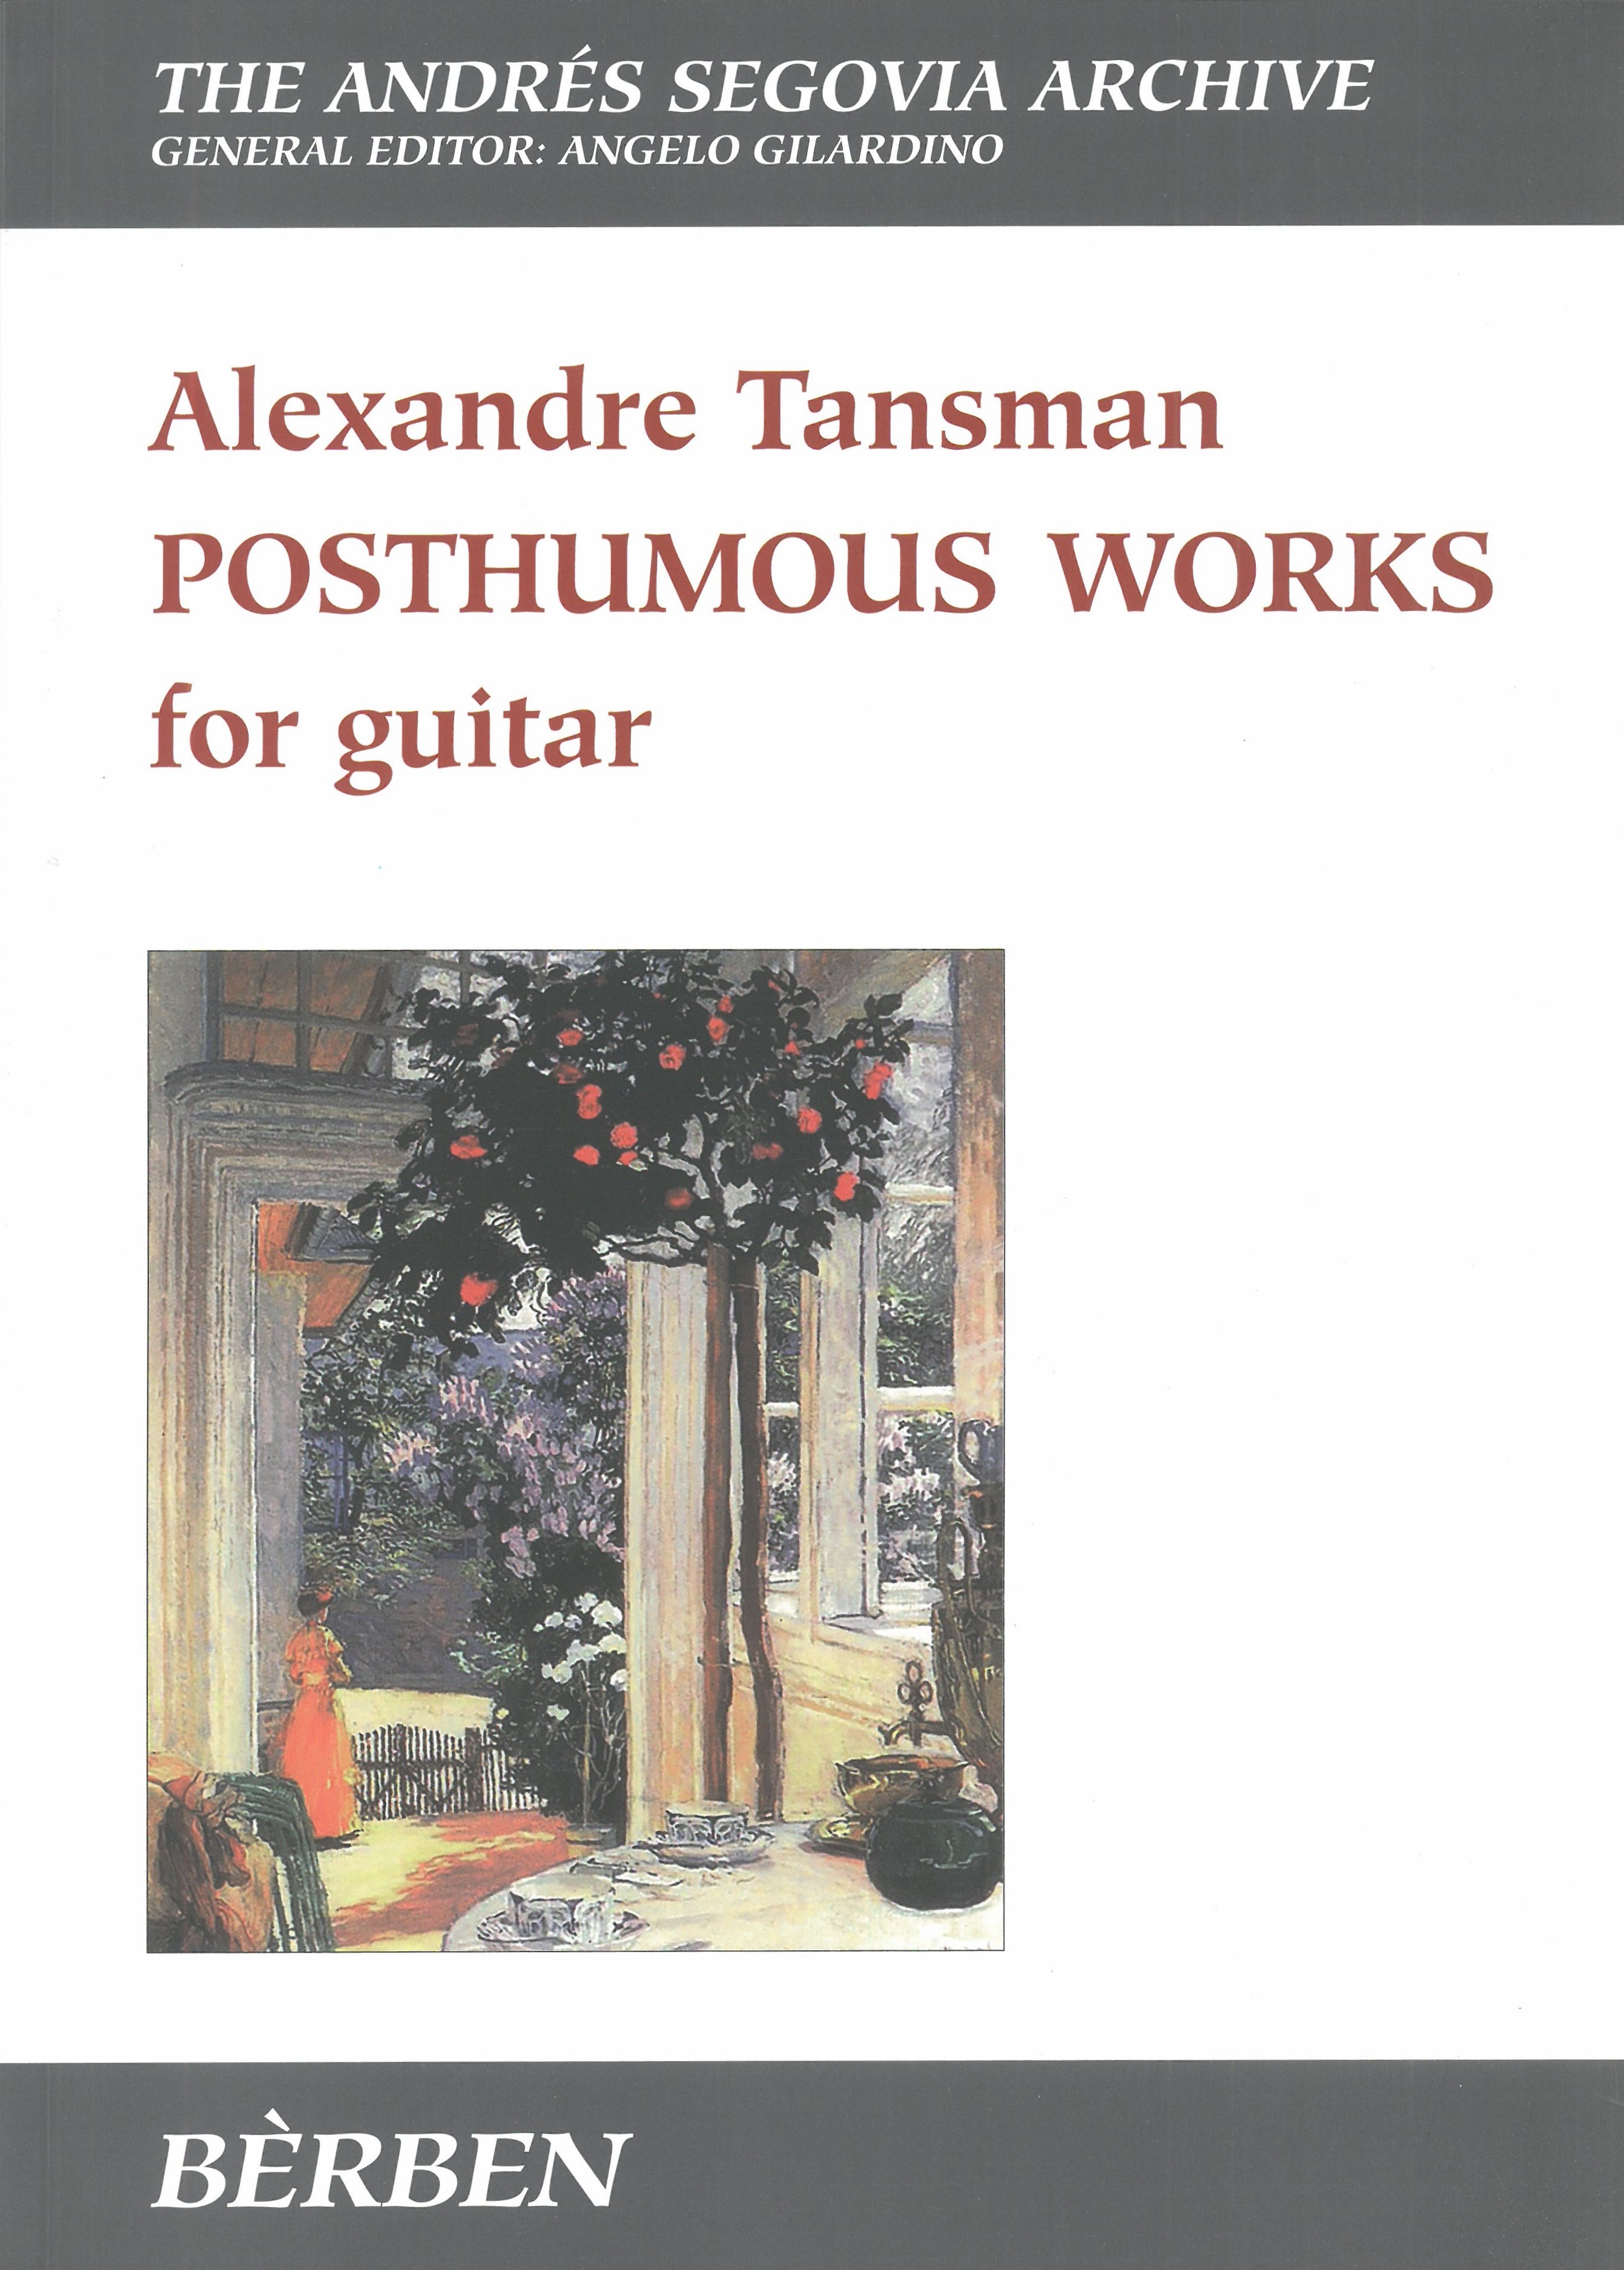 Posthumous Works For Guitar / edited by Angelo Gilardino and Luigi Biscaldi.